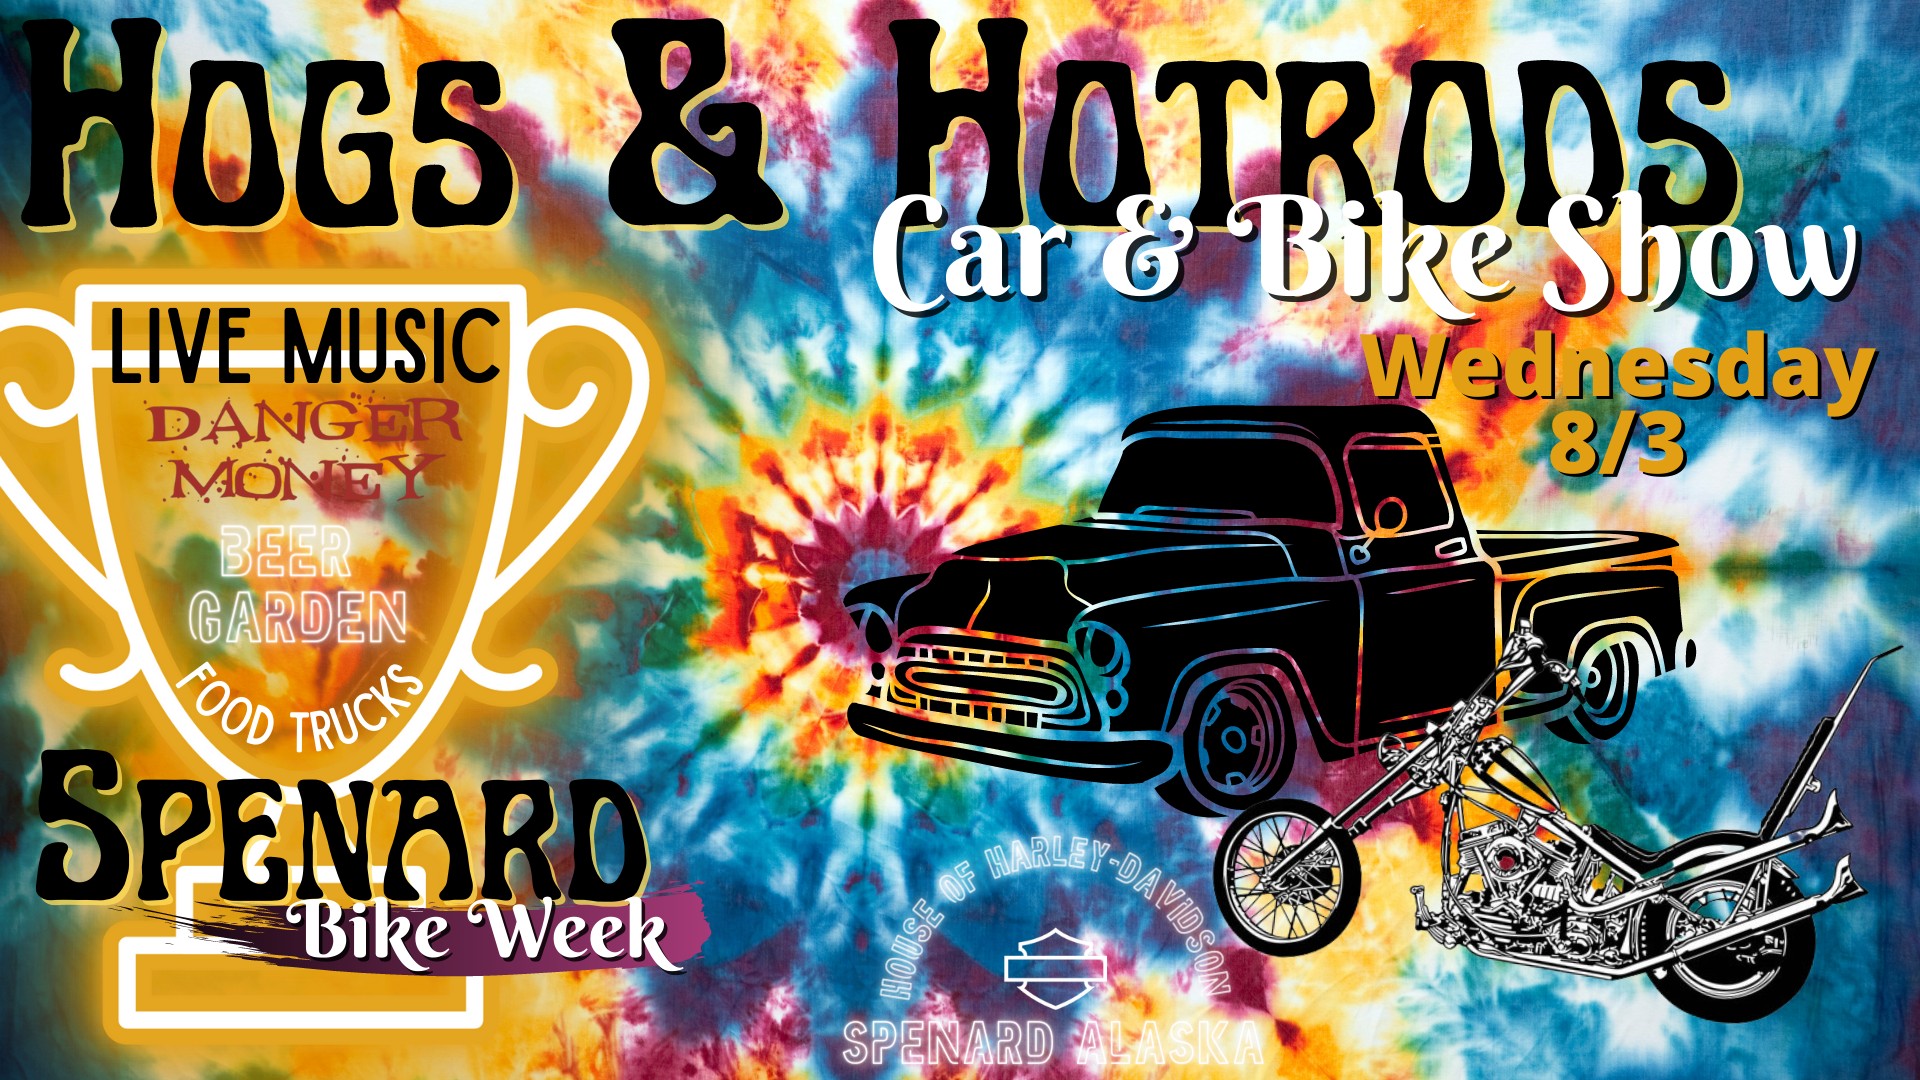 Spenard Bike Week - Hogs and Hot Rods Car and Bike Show